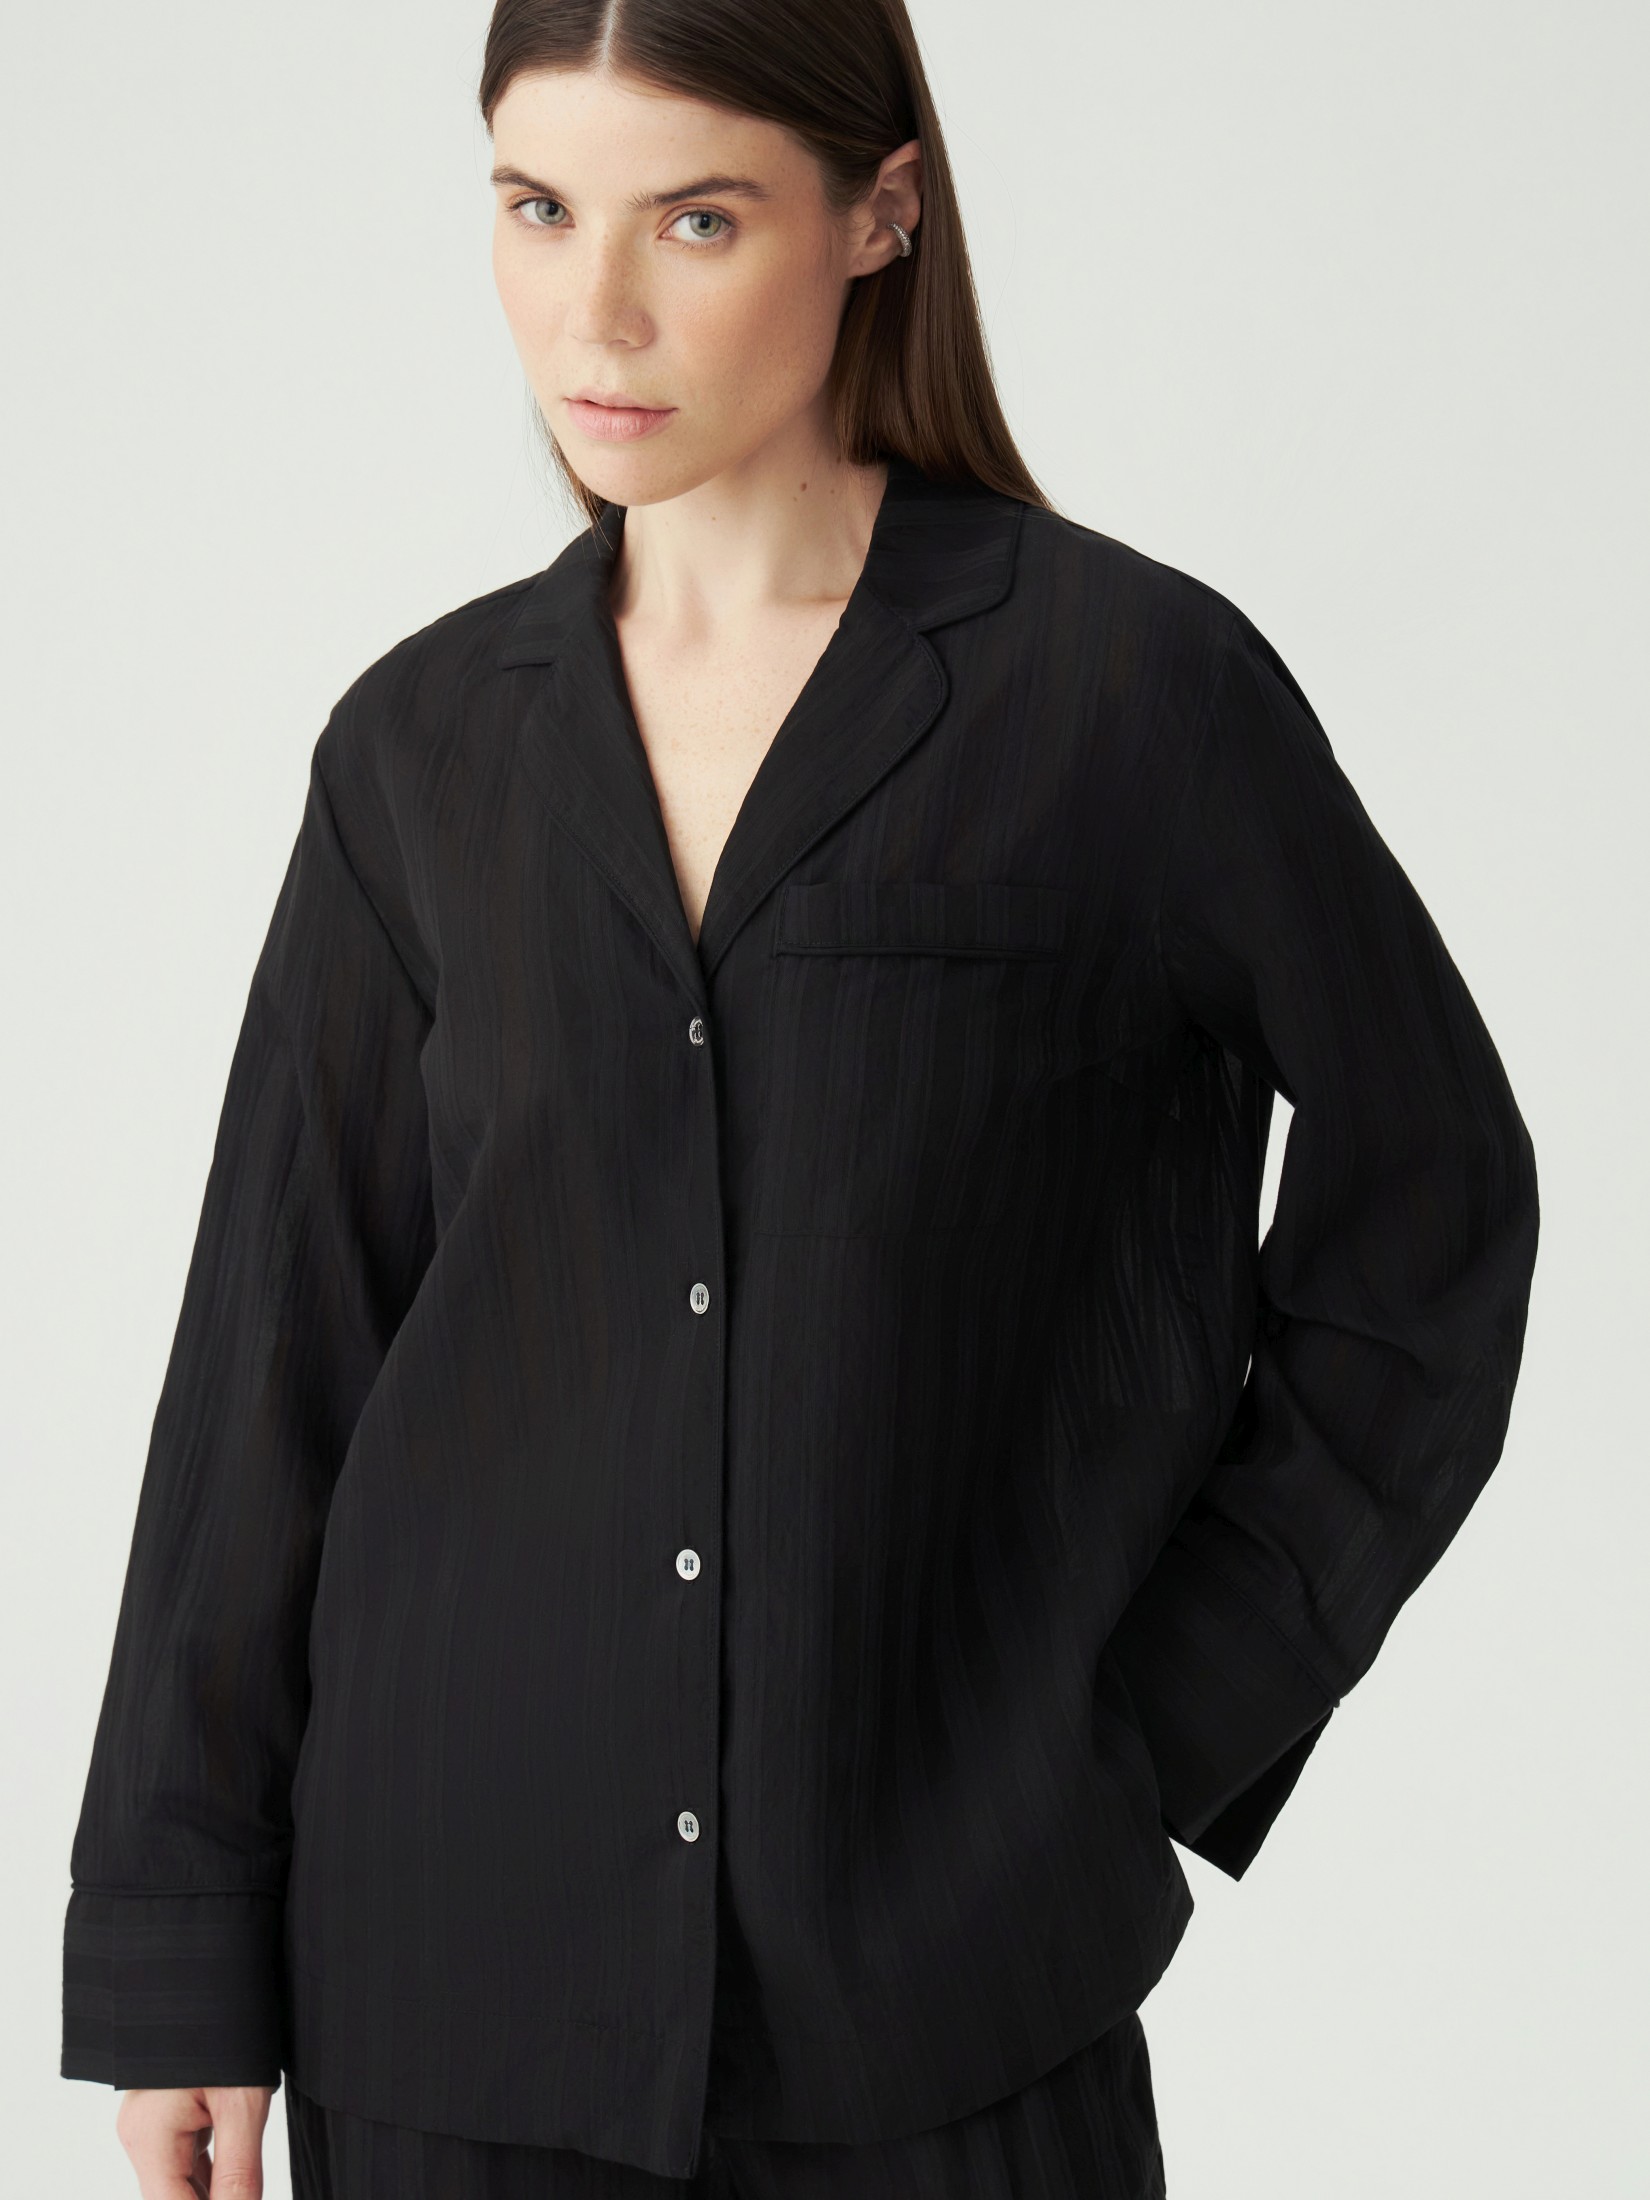 Блузка женская черная цена и фото